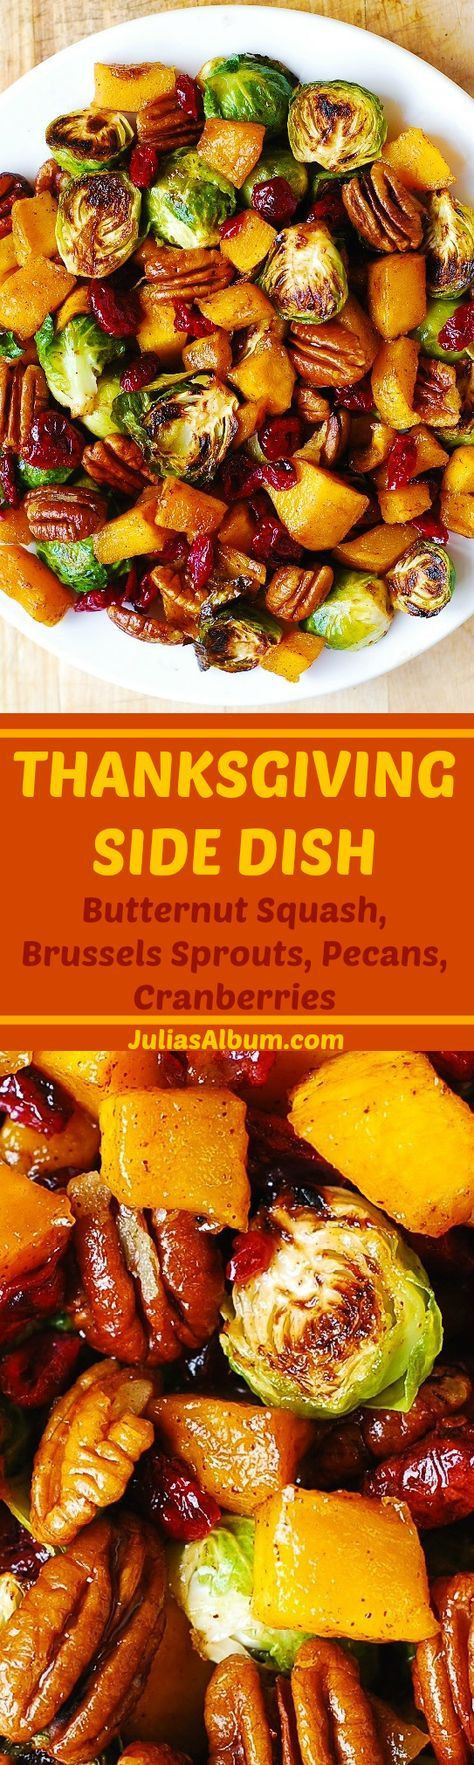 Vegetarian Sides For Thanksgiving
 Best 25 Thanksgiving recipes ideas on Pinterest